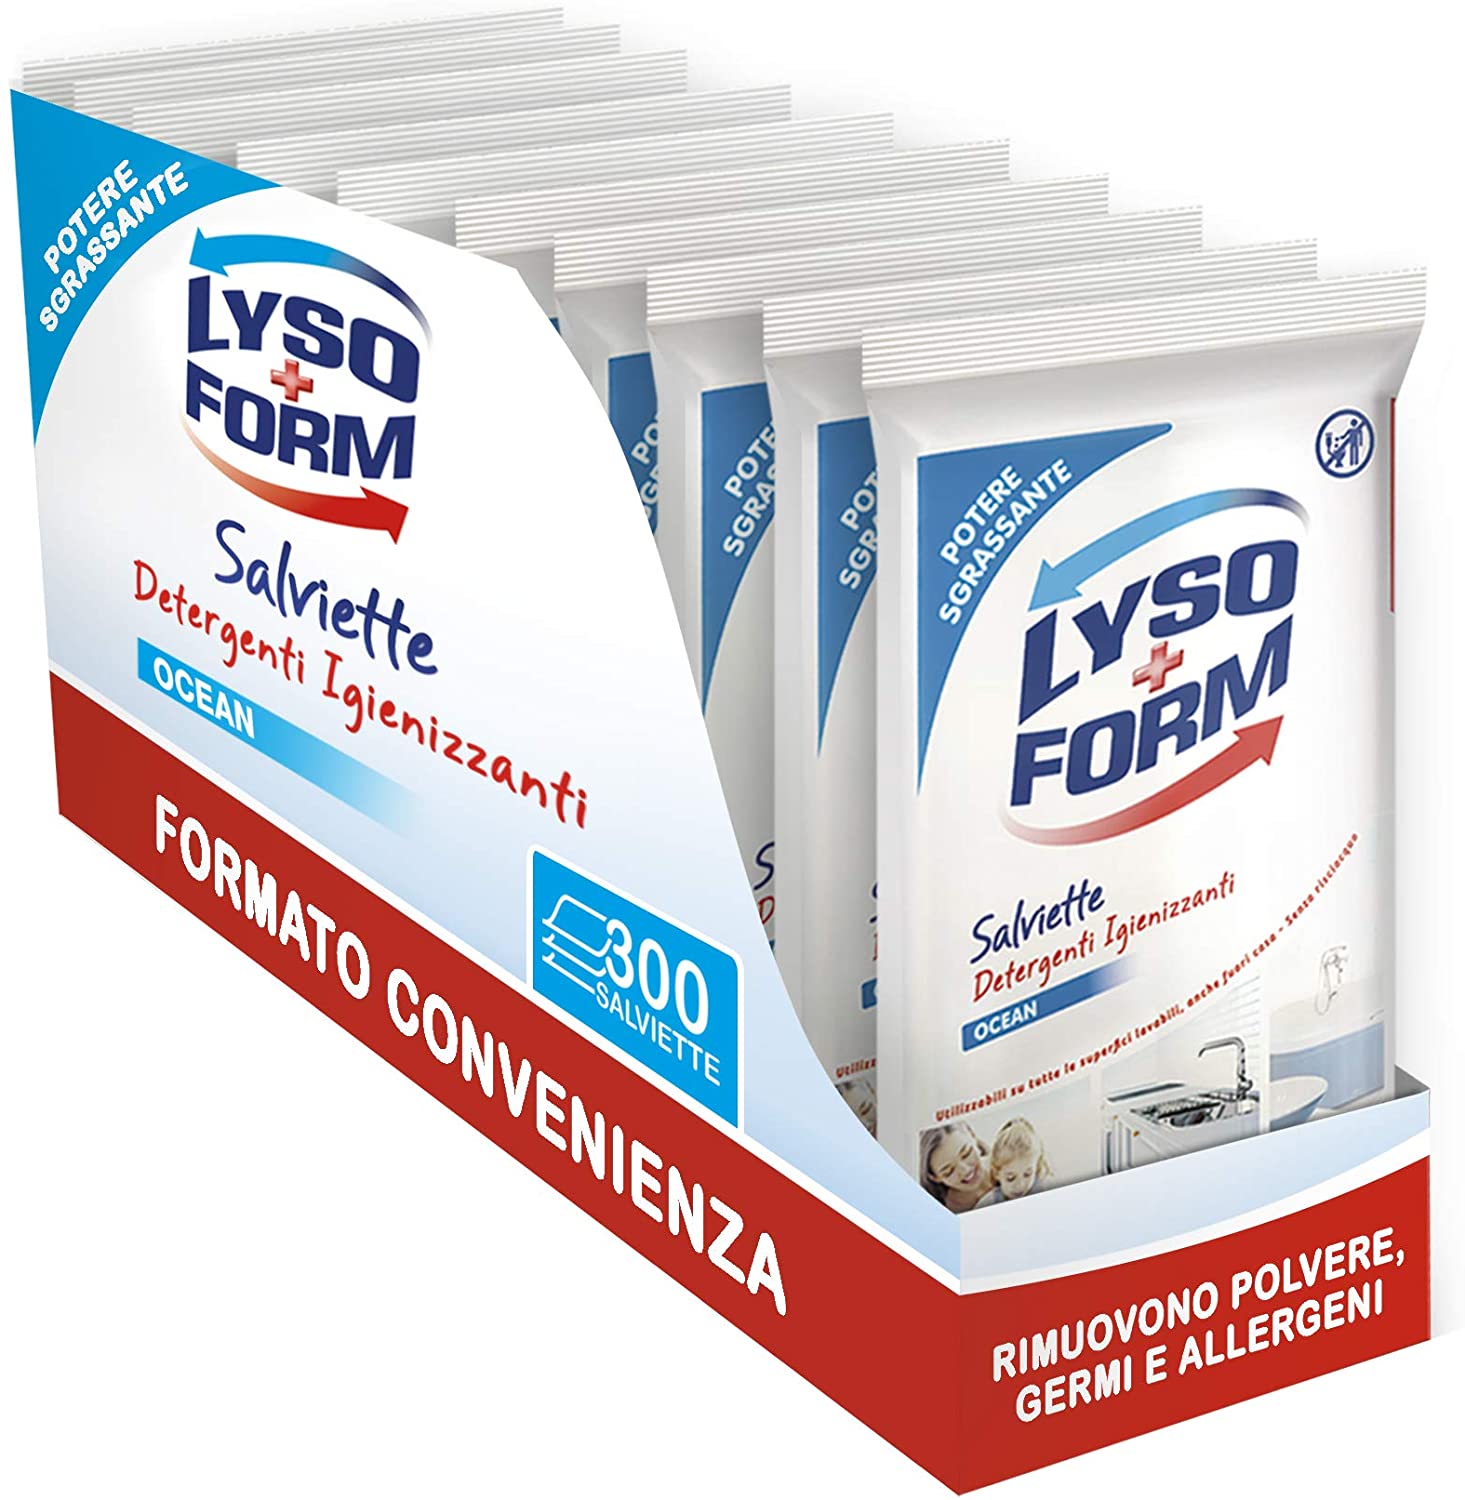 Lysoform Salviette Igienizzanti per Superfici Oceano, Megapack da 10 Confezioni, 300 Salviette